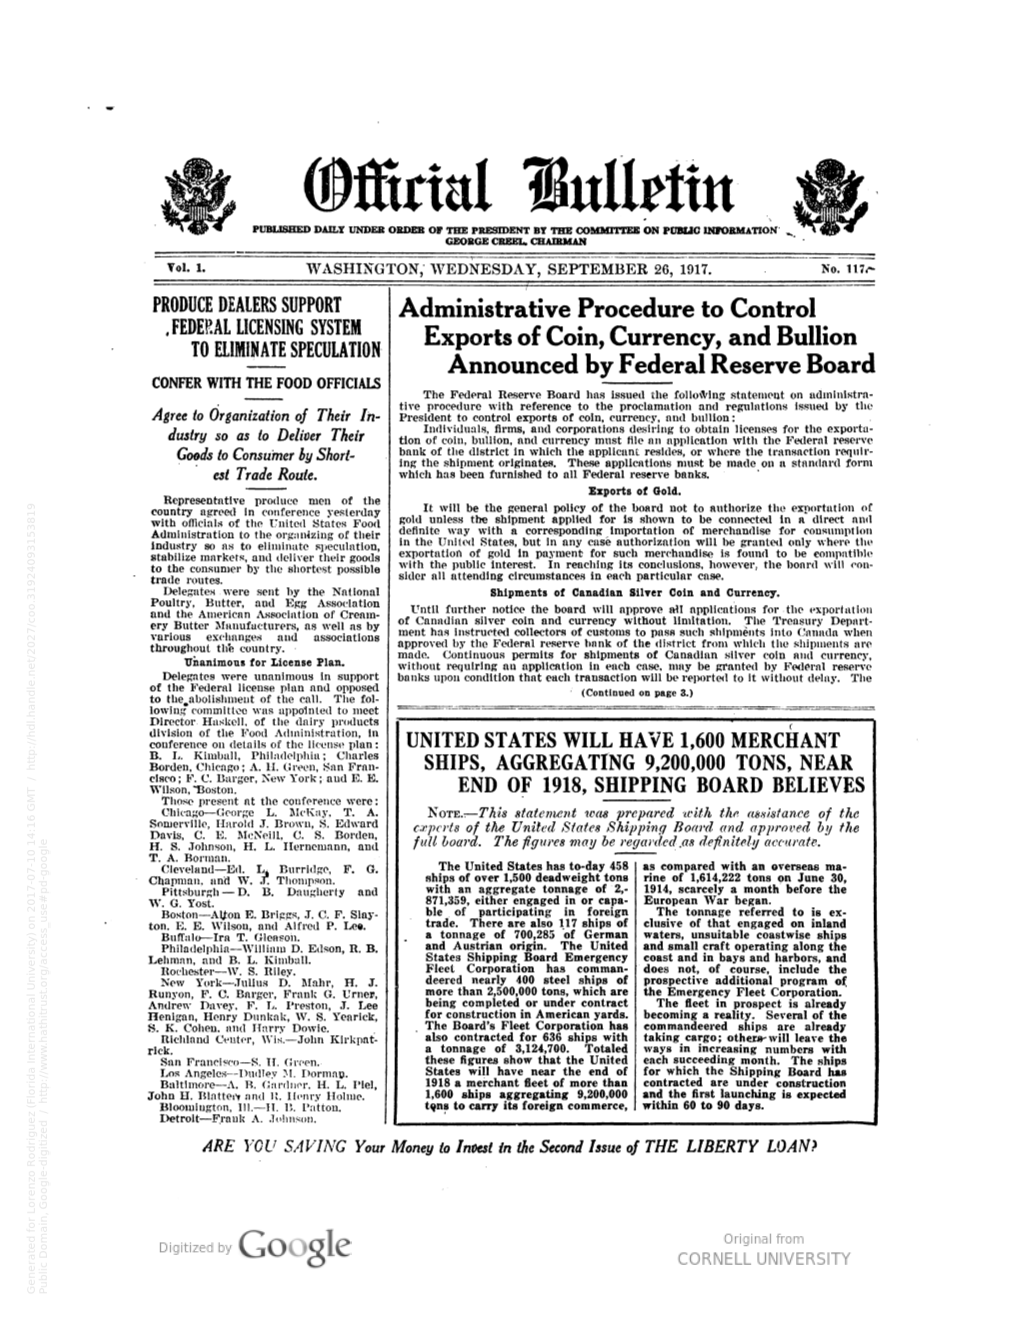 Official U. S. Bulletin